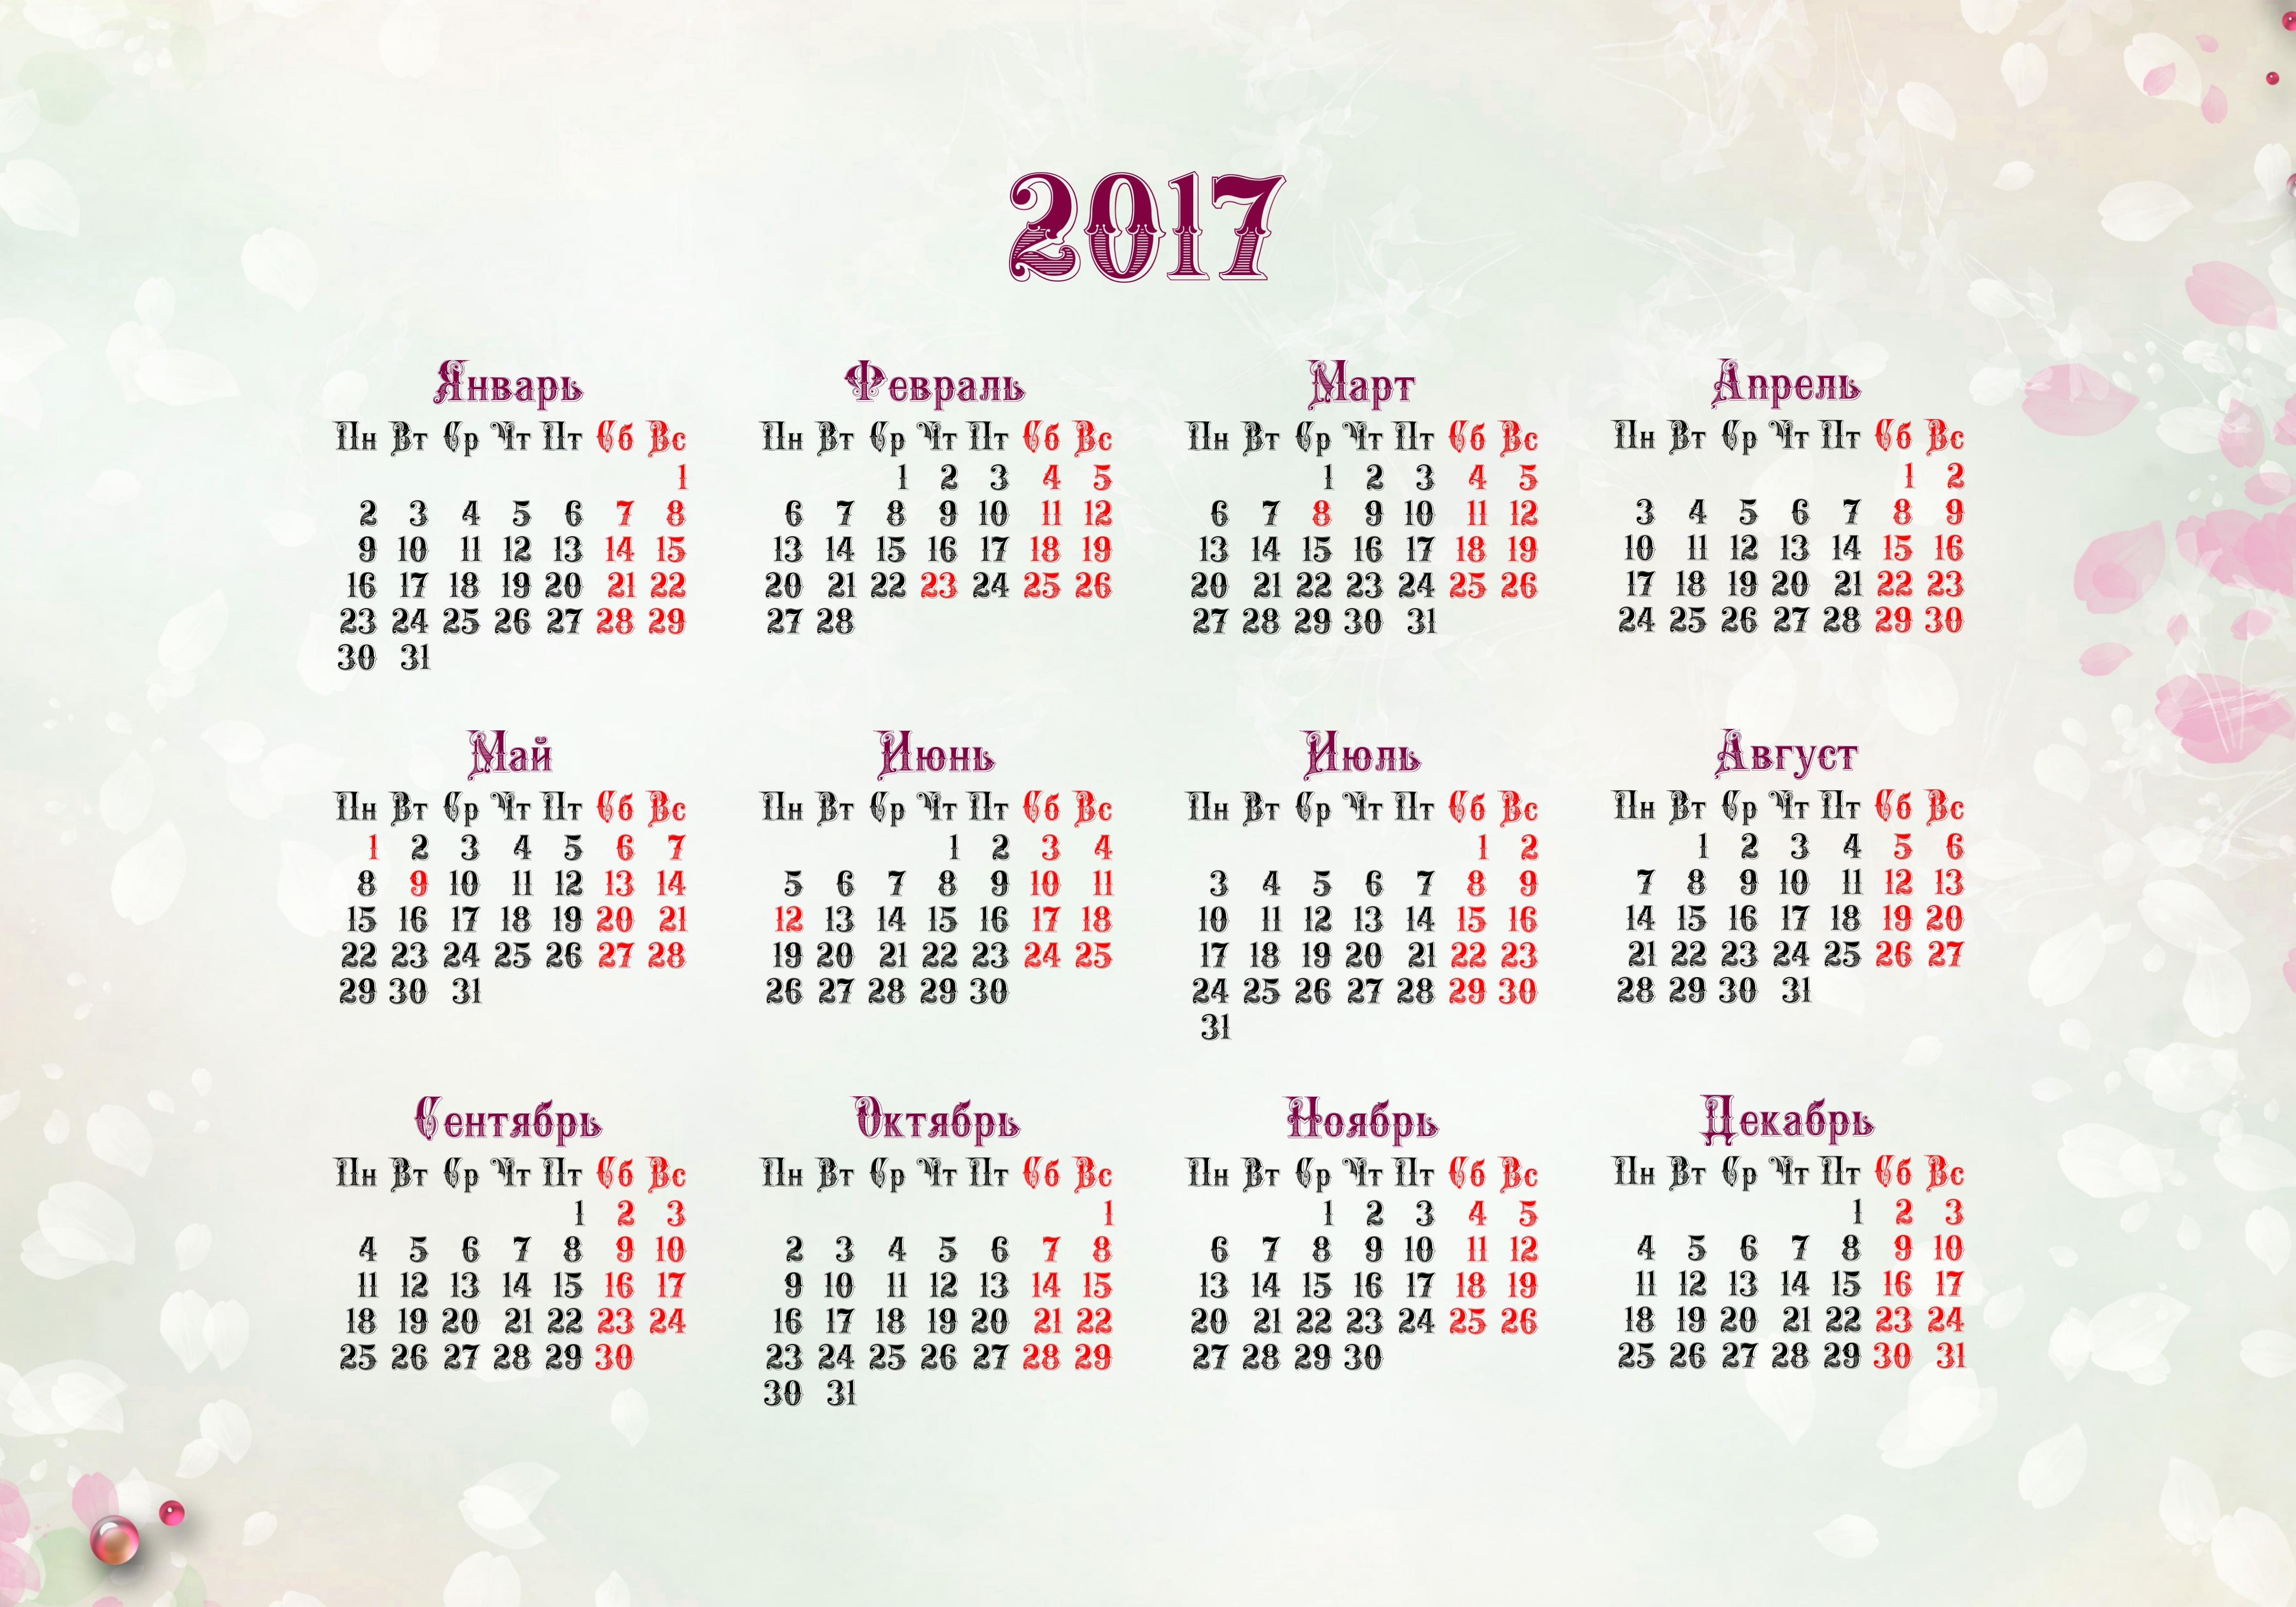 Wallpapers 2017 calendar for 2017 calendar grid for 2017 on the desktop